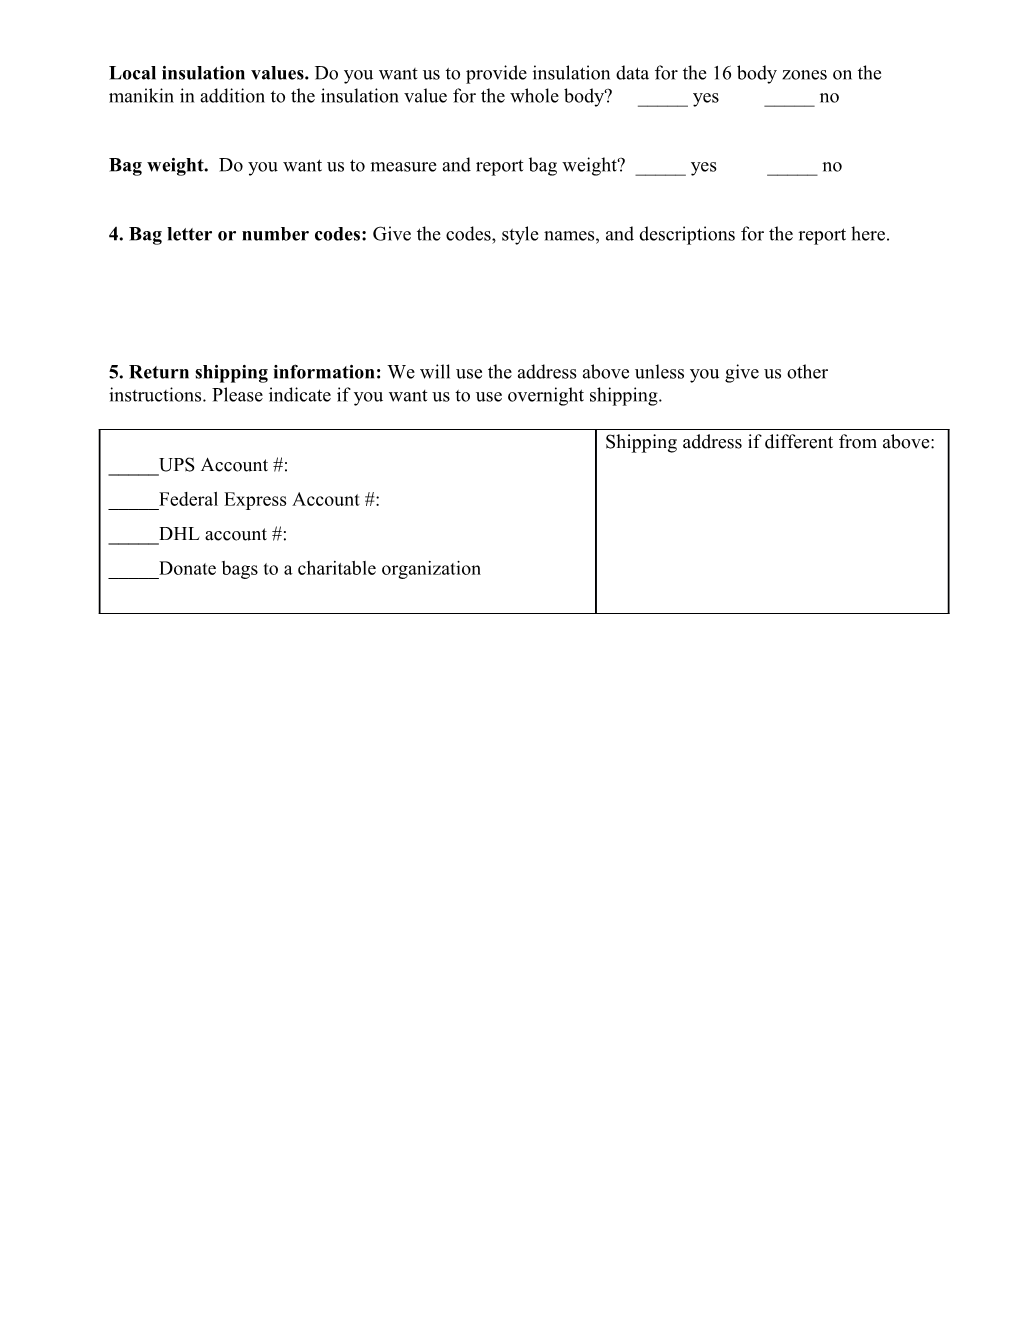 KSU Submission Form for Children S Sleeping Bag Manikin Tests